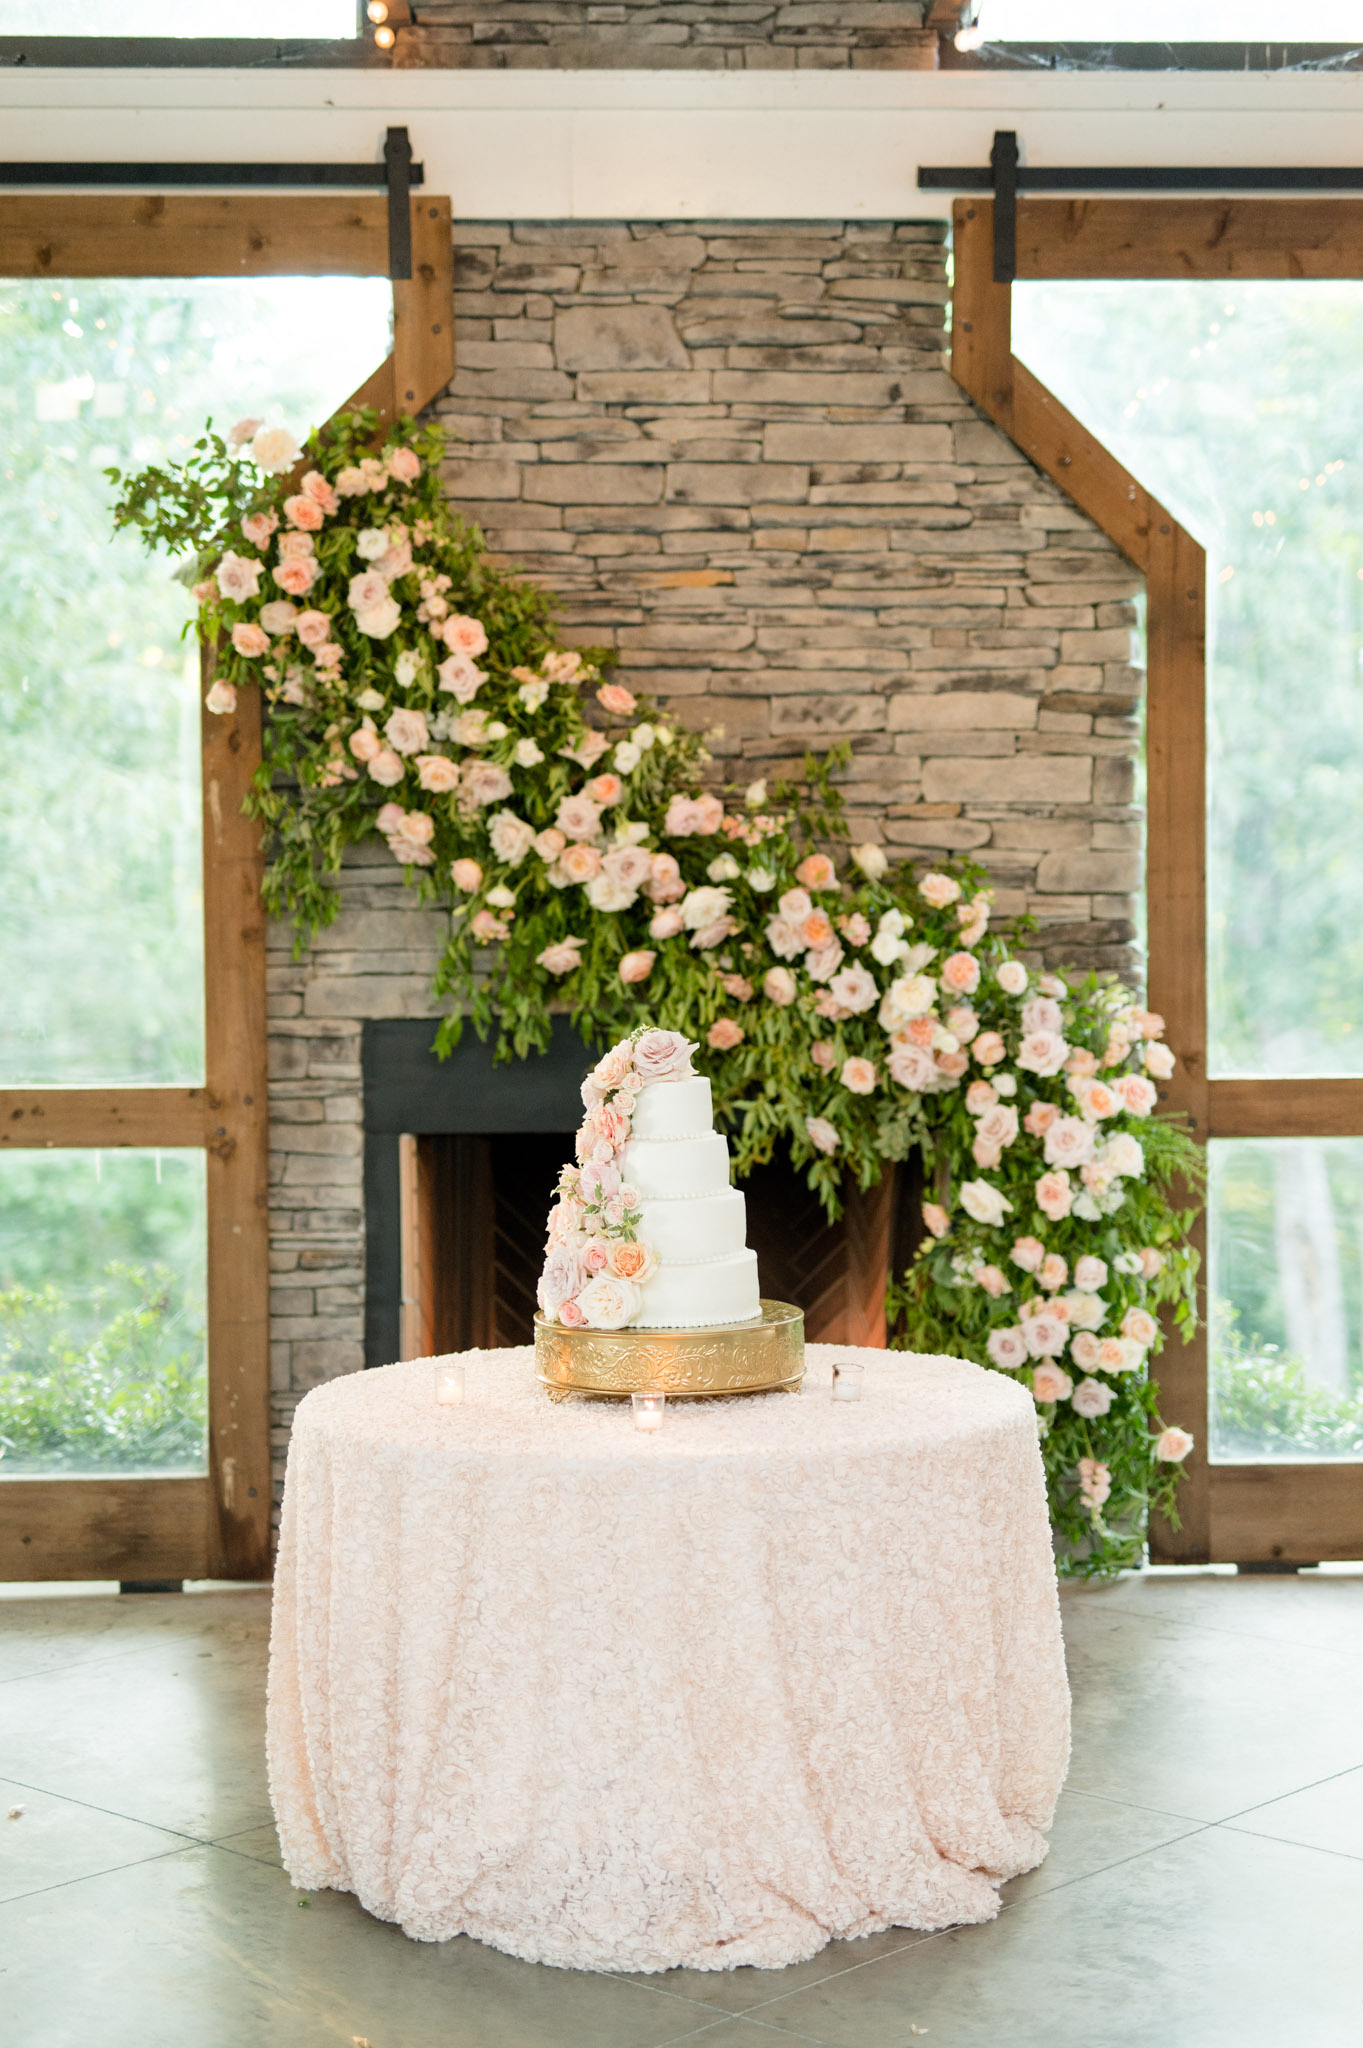 Wedding cake sits on cake table.